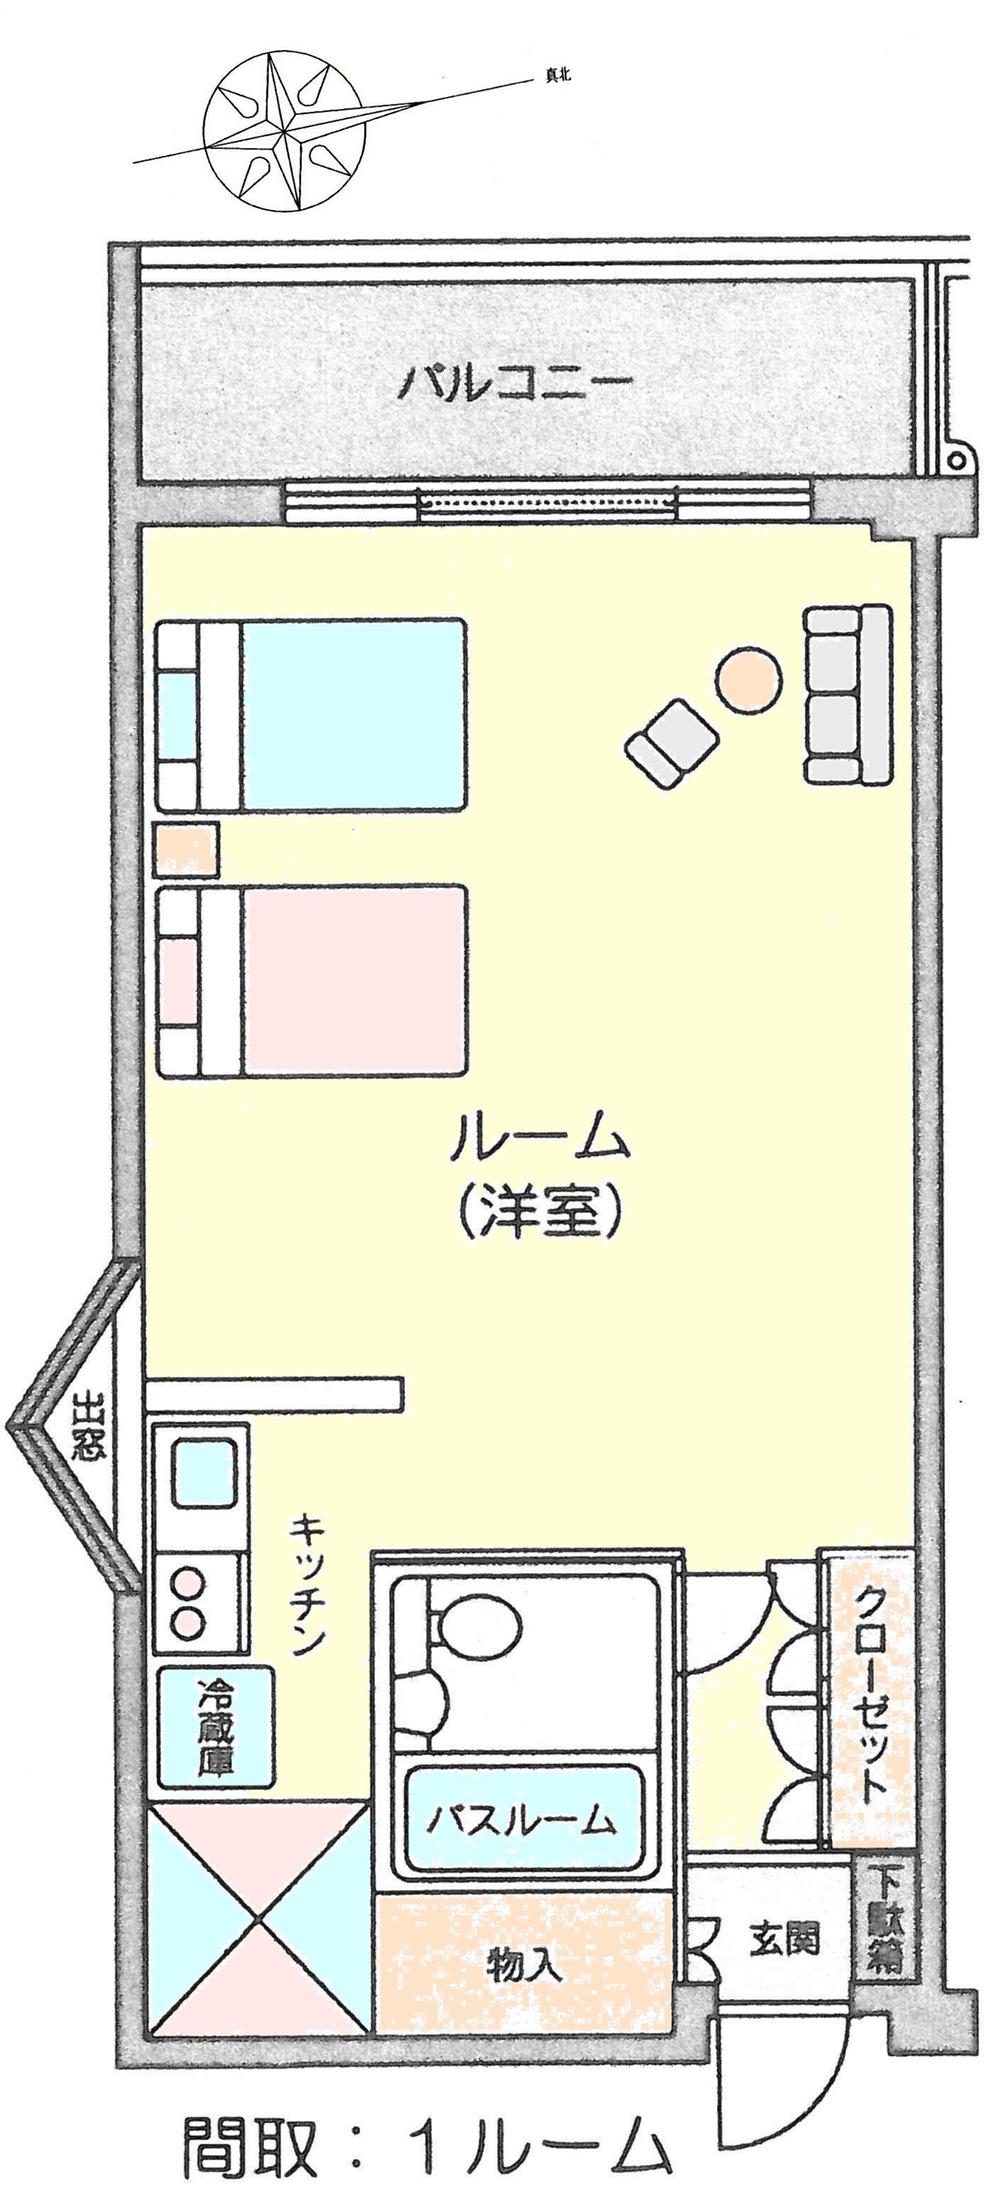 Floor plan. 1LDK, Price 5.3 million yen, Occupied area 48.46 sq m , Balcony area 7.5 sq m